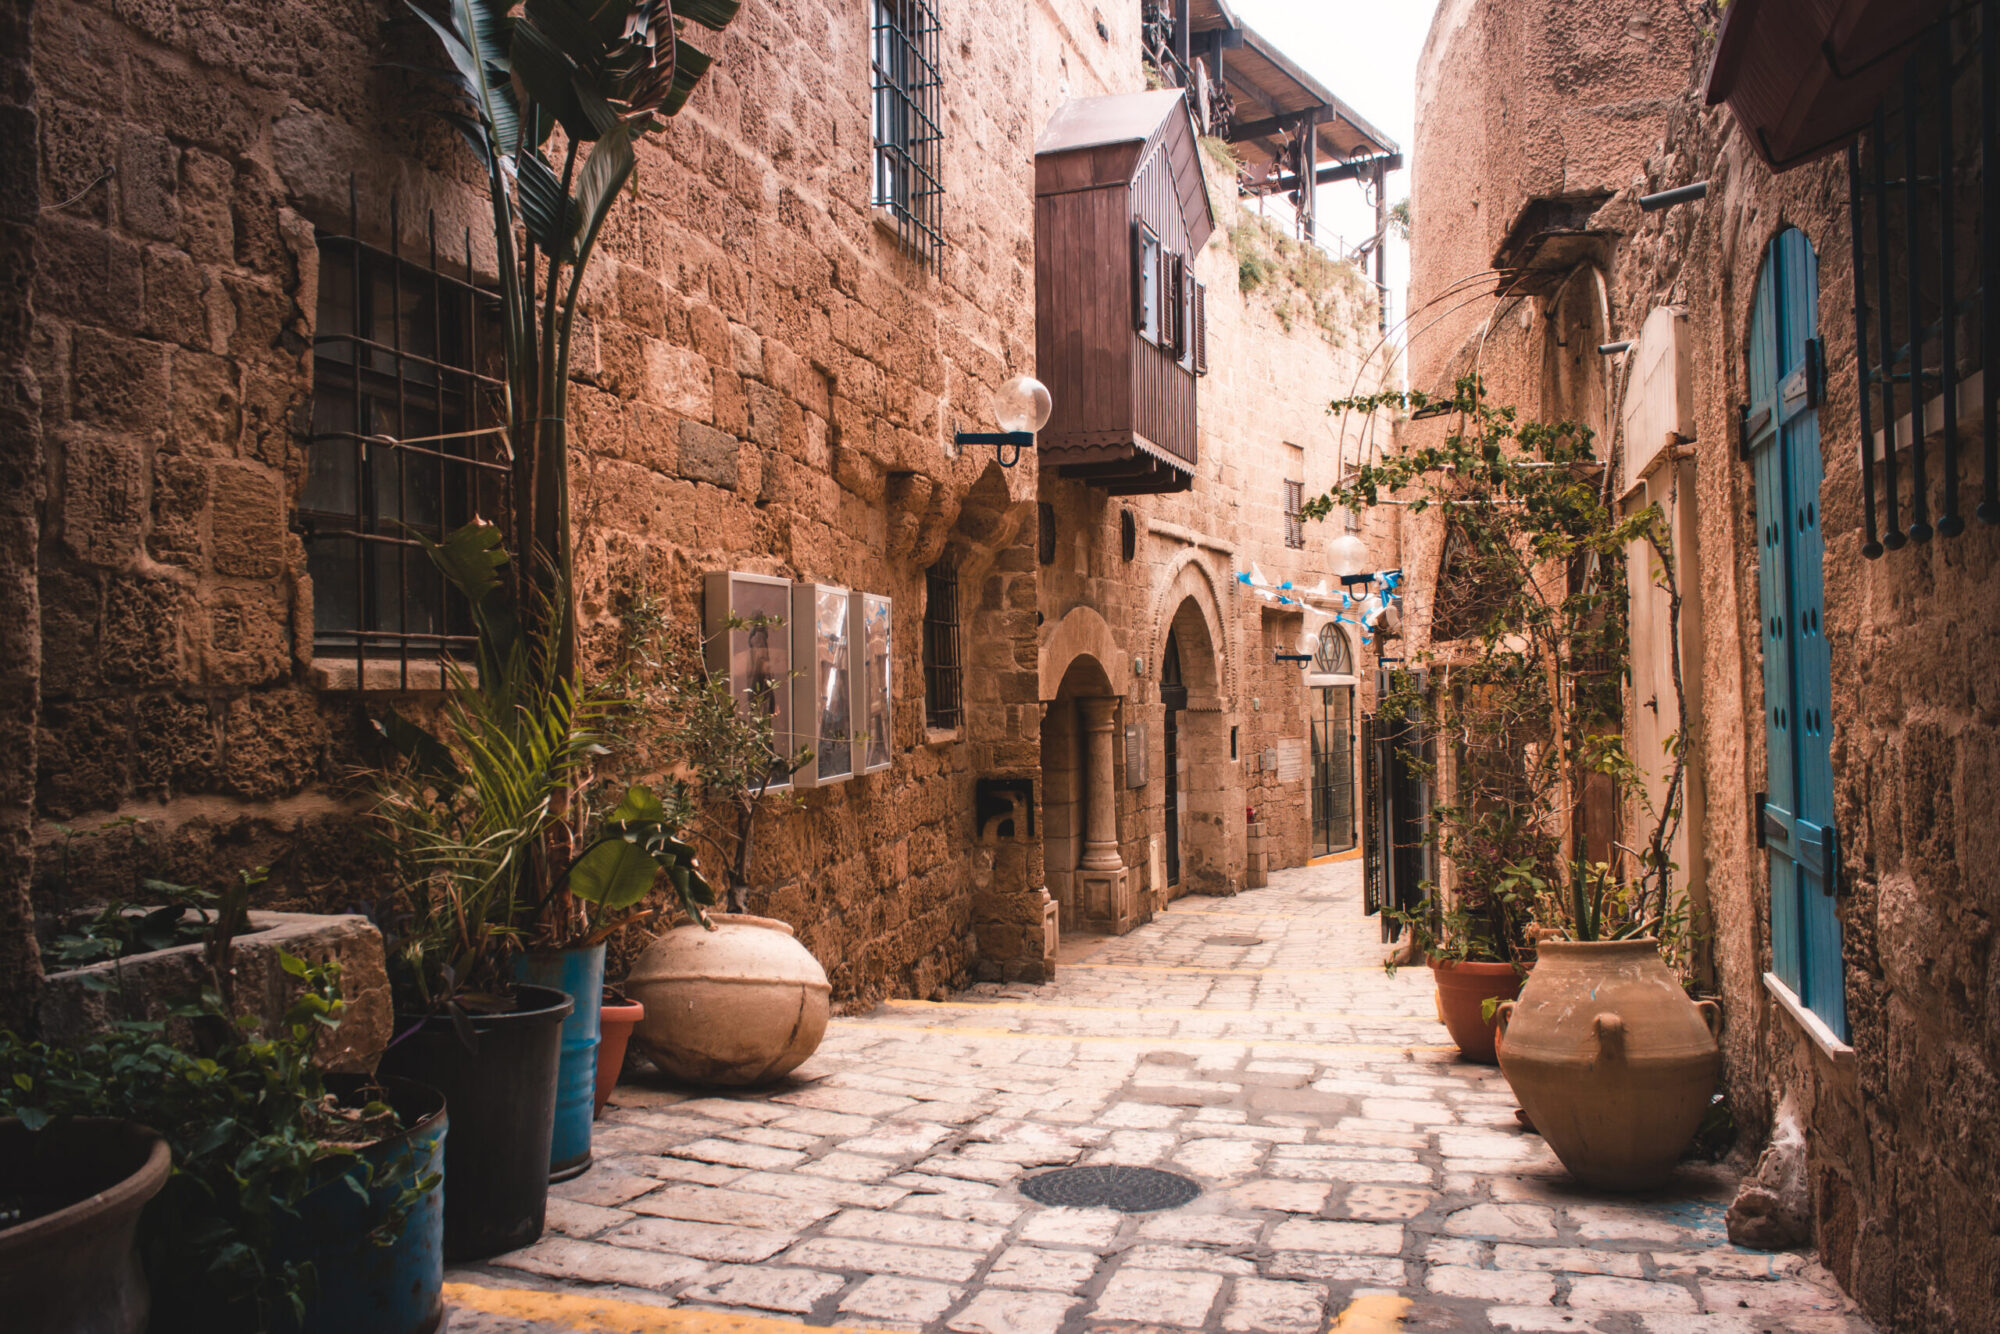 Alleyway in Jerusalem's Old City